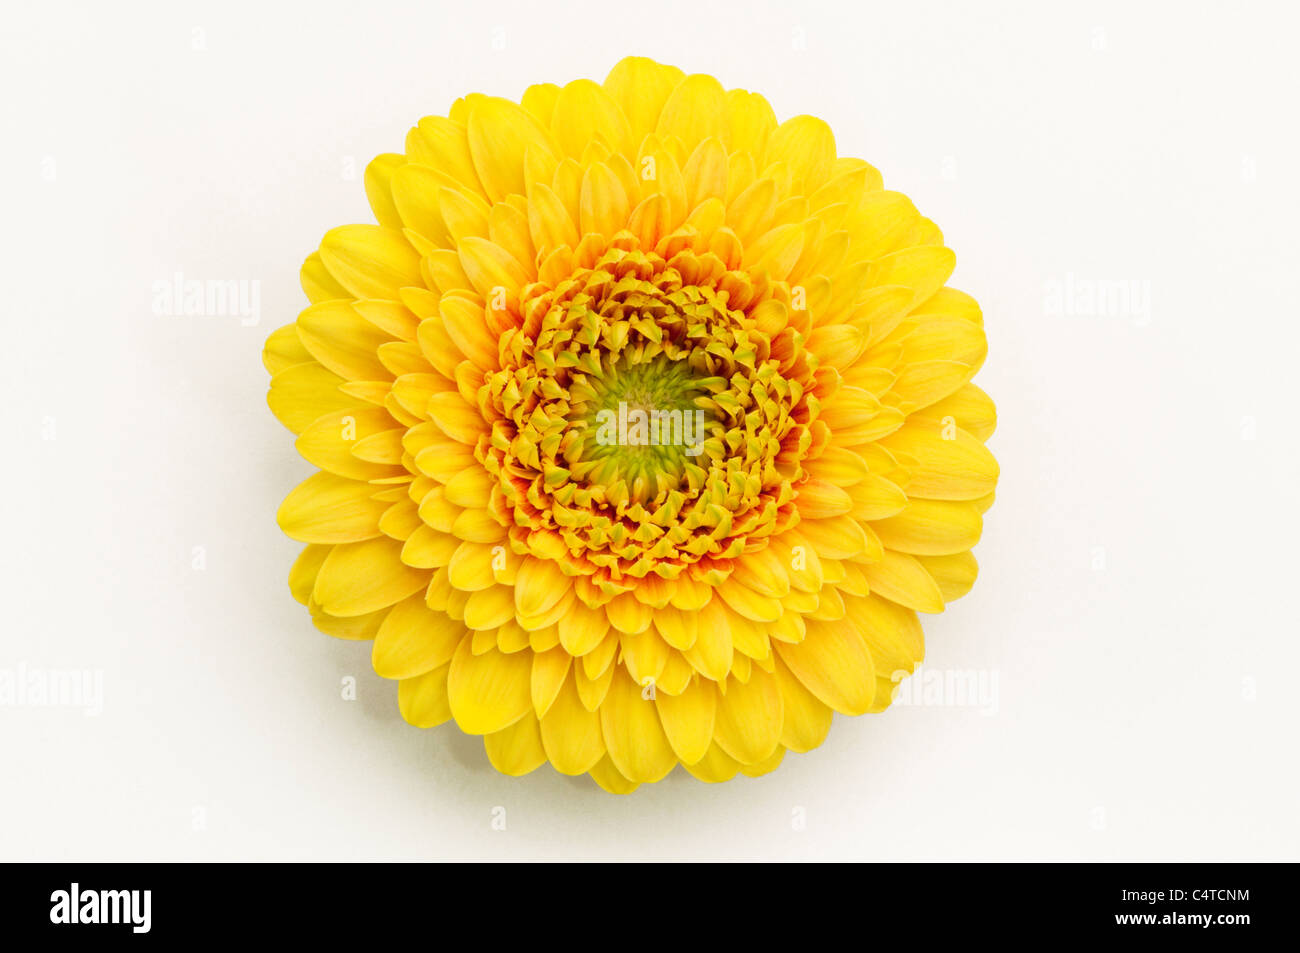 Barberton Daisy, Gerbera, Transvaal Daisy (Gerbera hybrid), yellow flower. Studio picture against a white background. Stock Photo